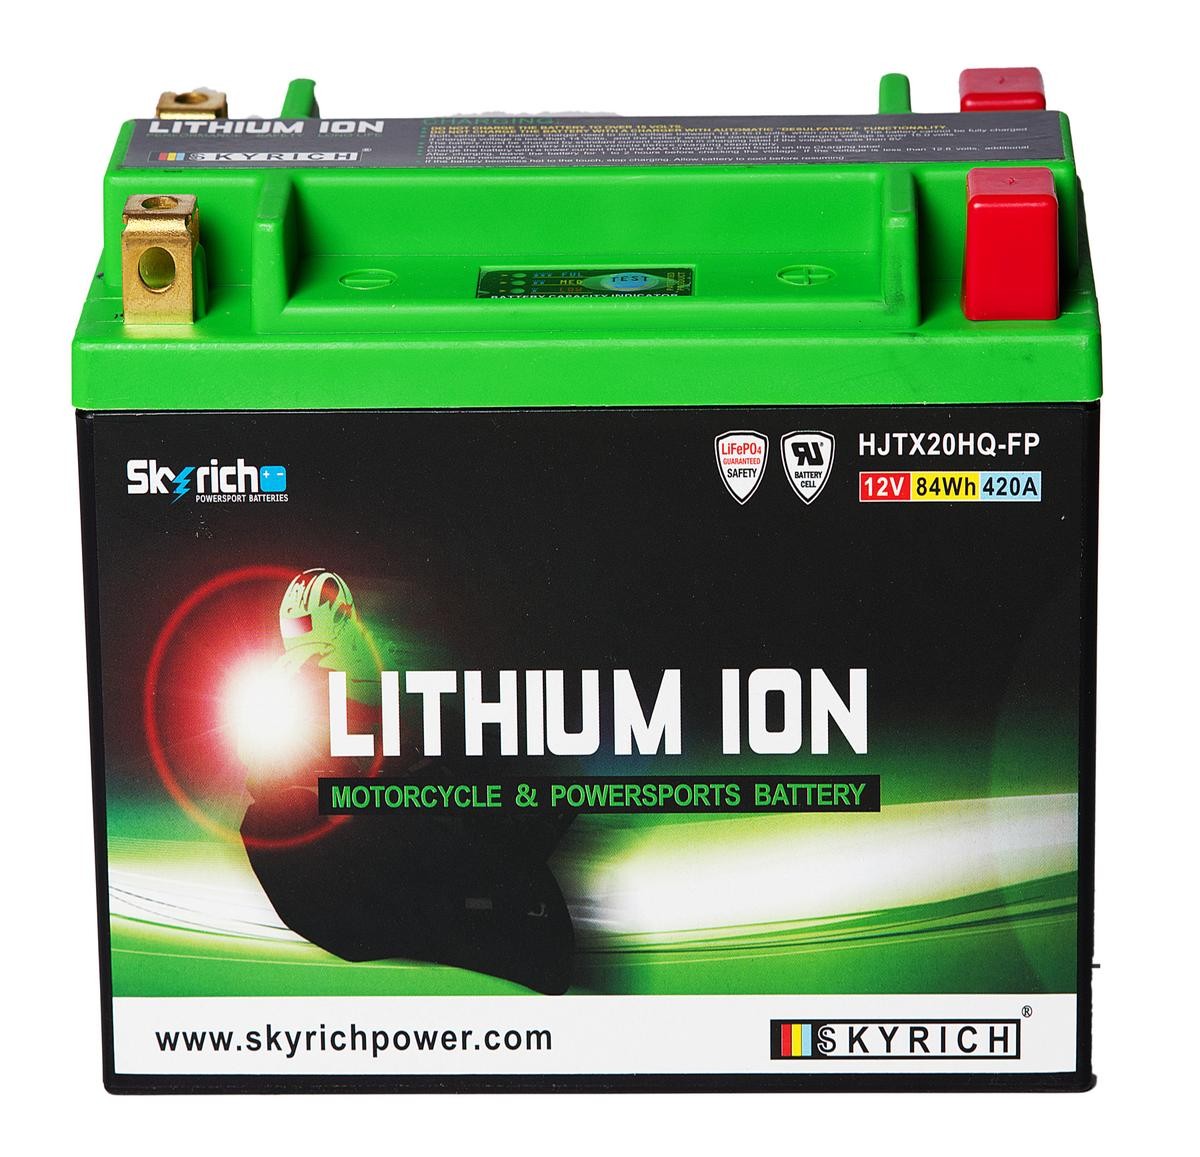 CAGIVA ELEFANT Batterie 12V 7Ah 420A N Li-Ionen-Batterie SKYRICH LITHIUM ION HJTX20HQ-FP